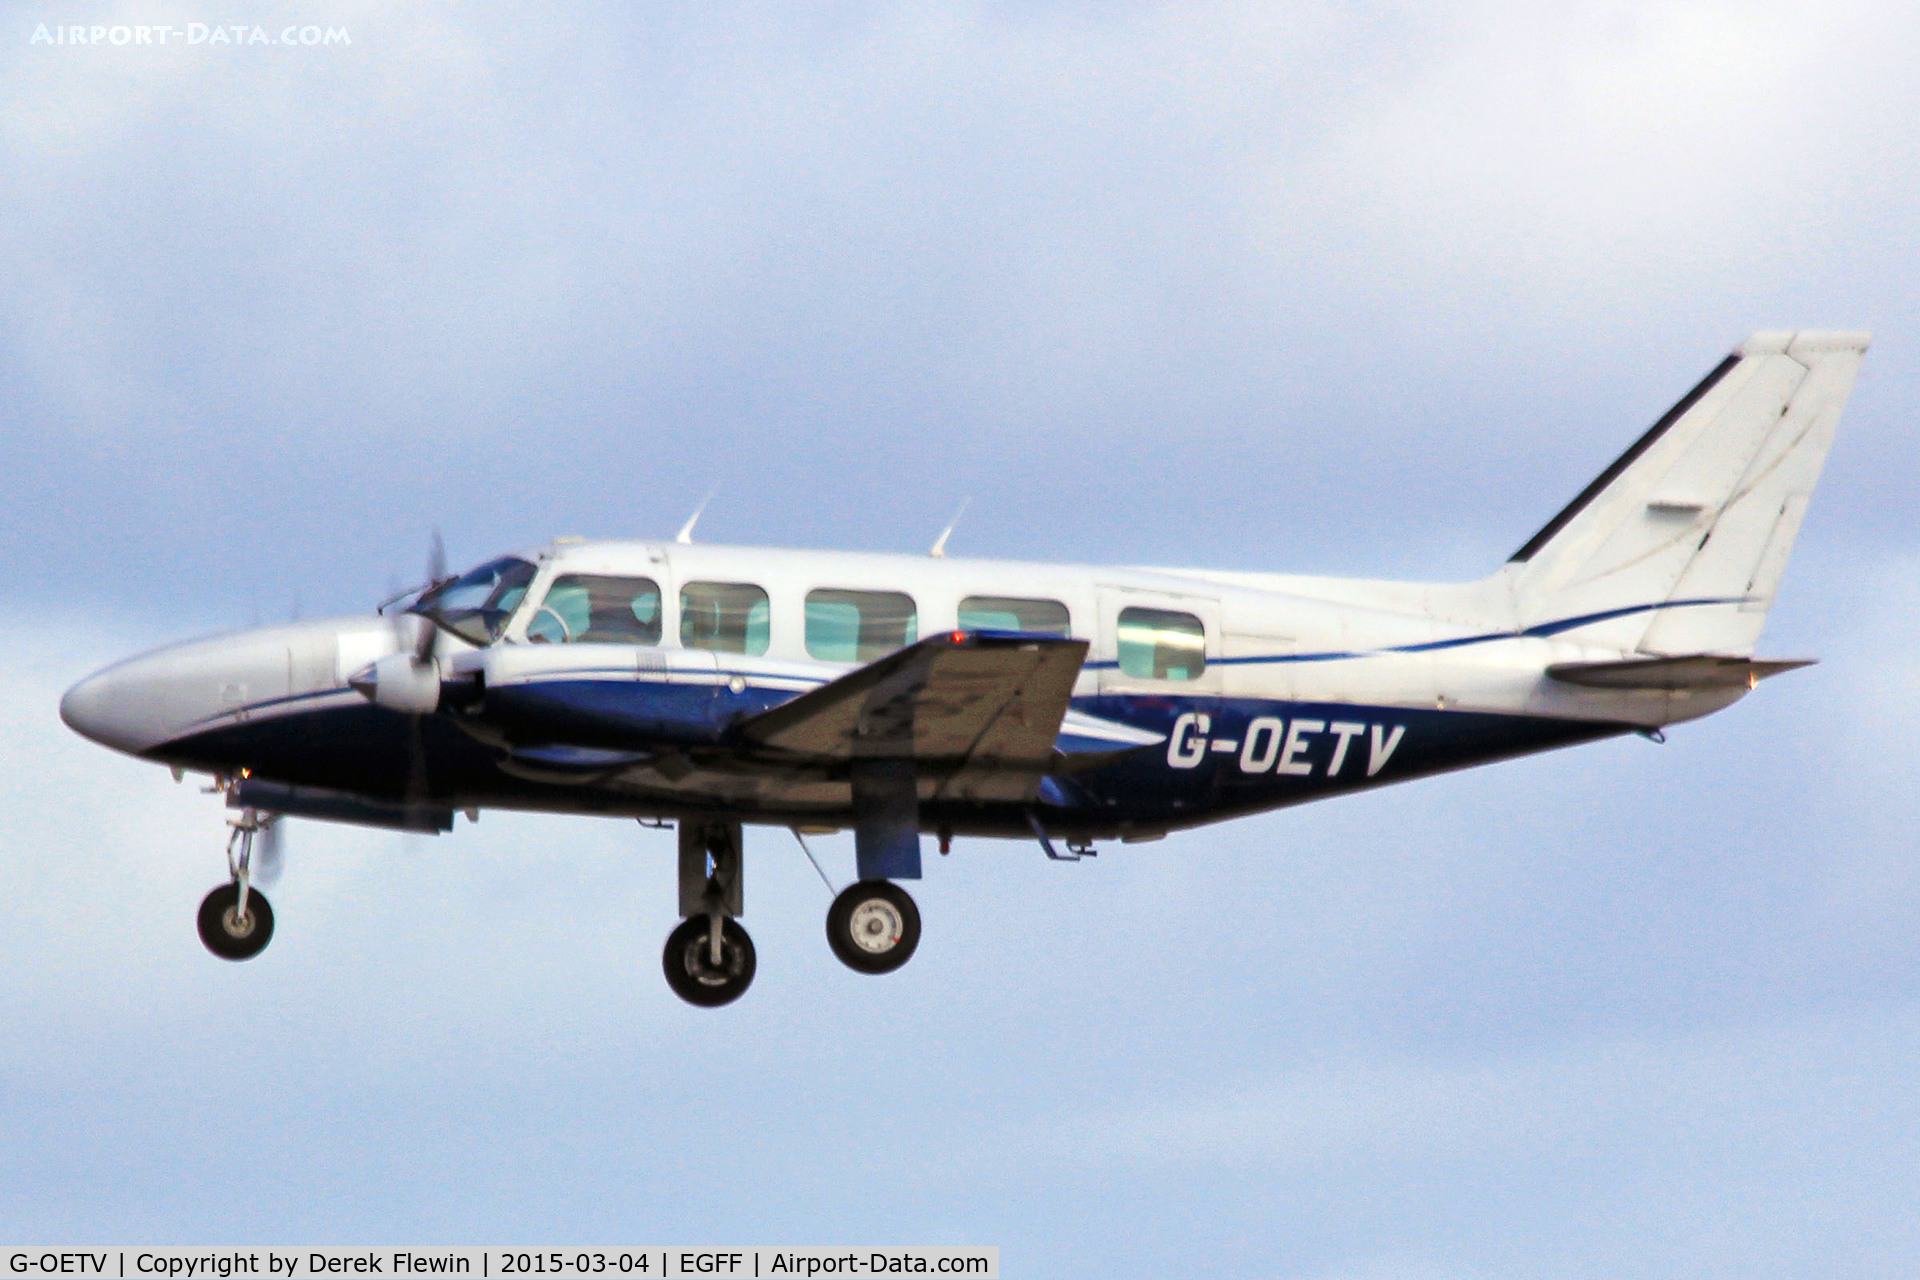 G-OETV, 1978 Piper PA-31-350 Chieftain C/N 31-7852073, Navajo Chieftan, EGFF resident previously N27597, seen departing runway 30, en route to St Athan.